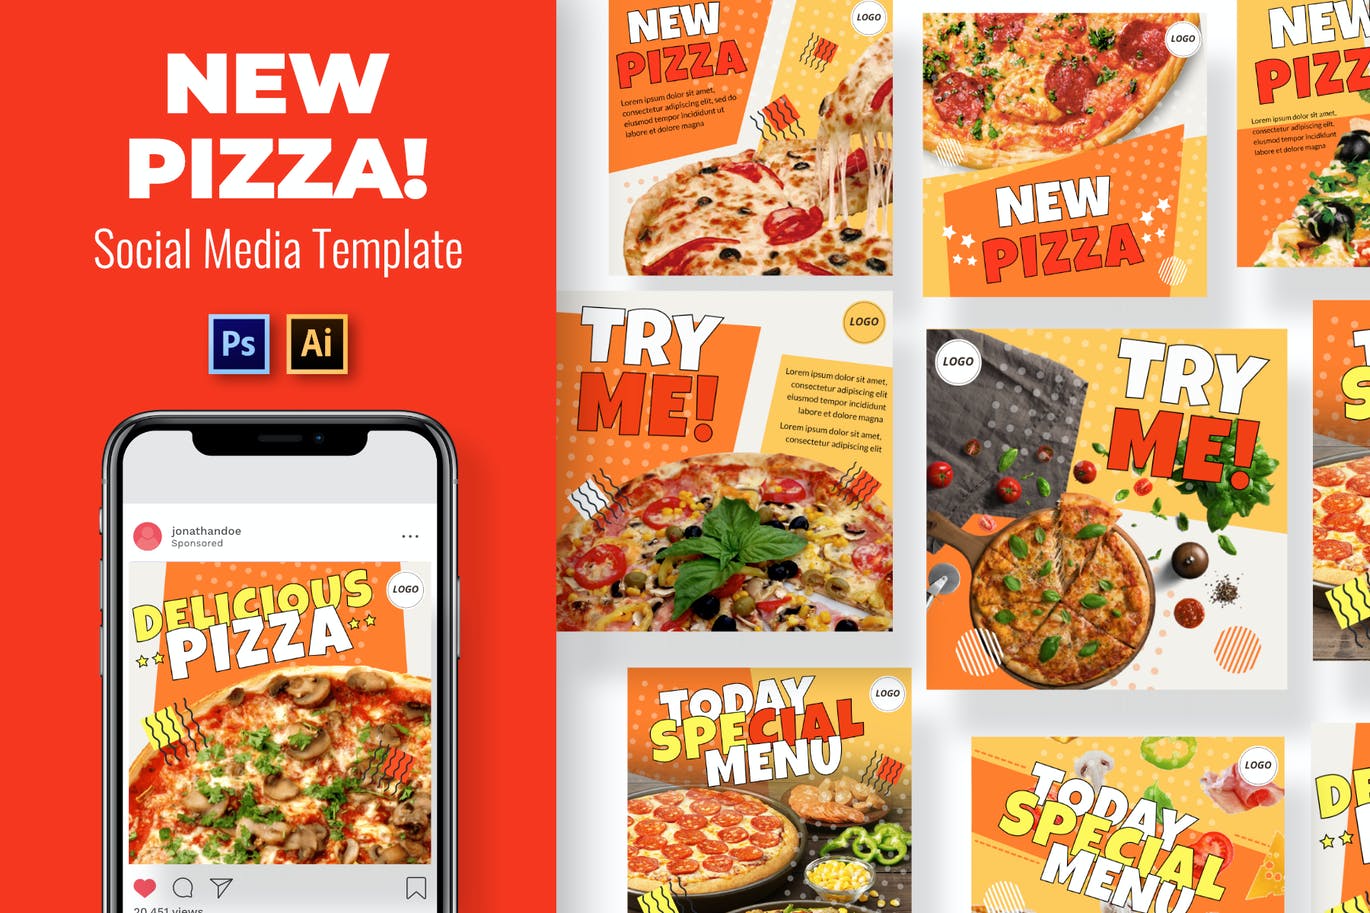 New Pizza Social Media Template